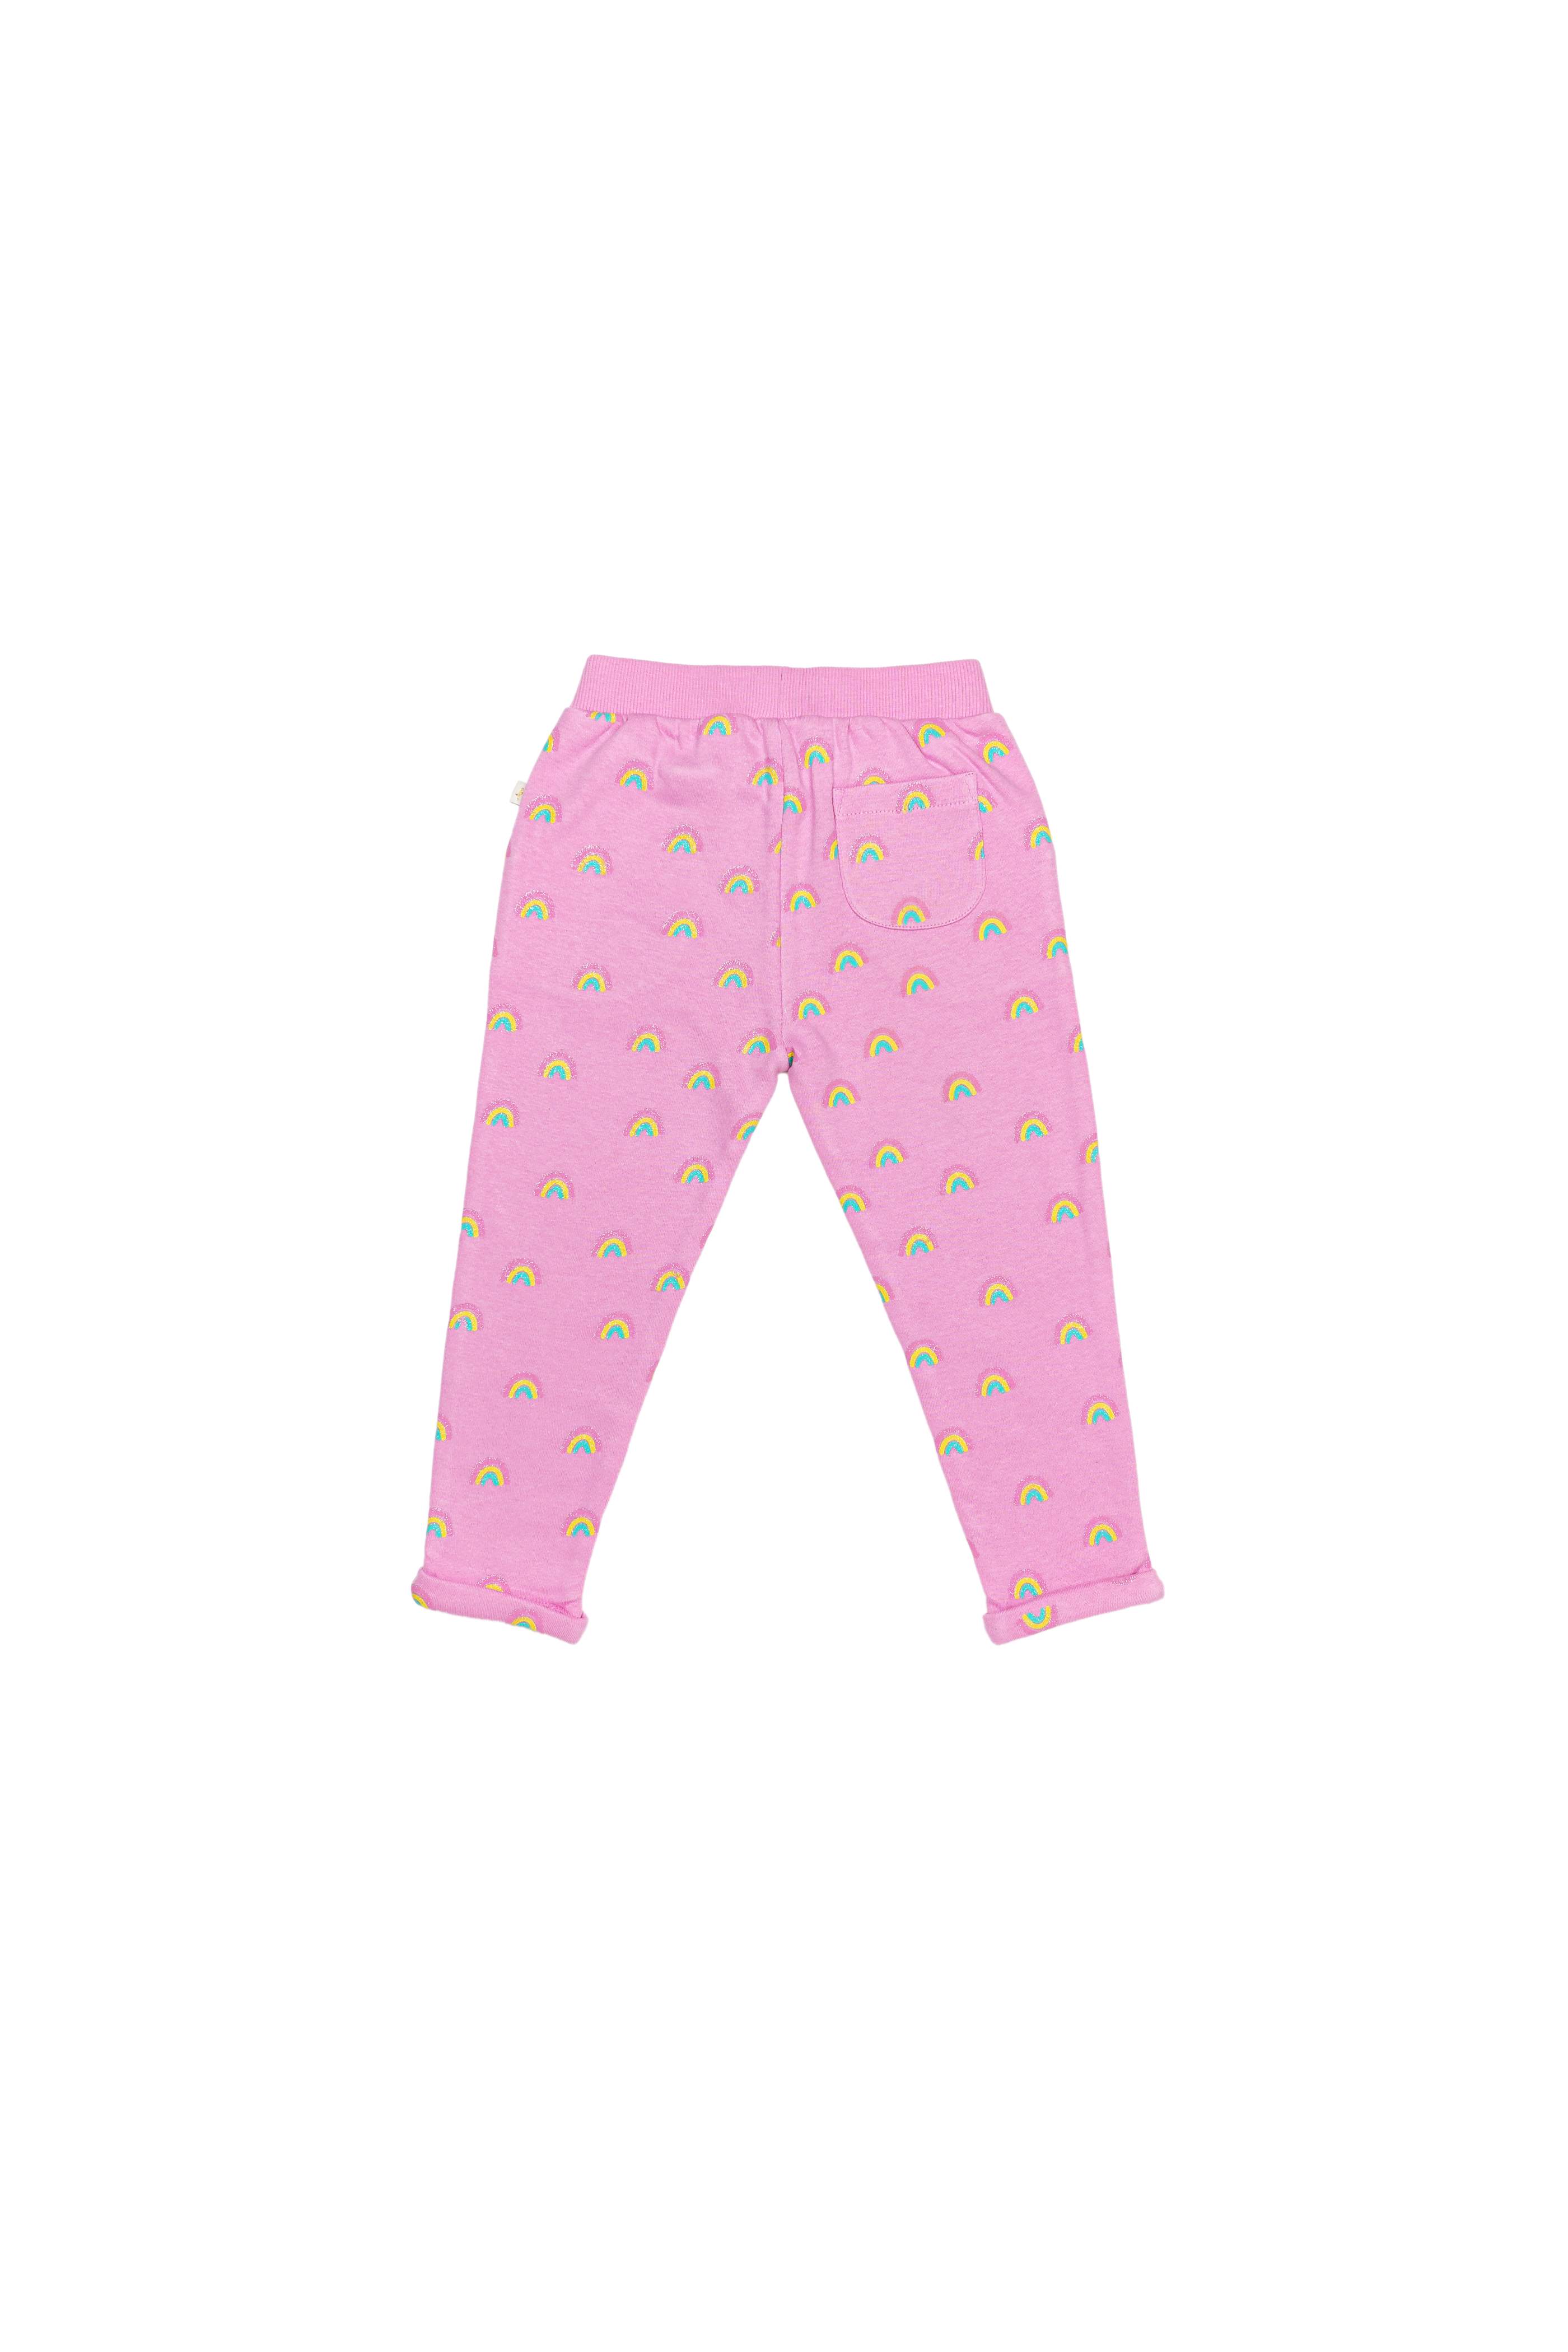 H by Hamleys Infant Girls Printed Pink Track Pants